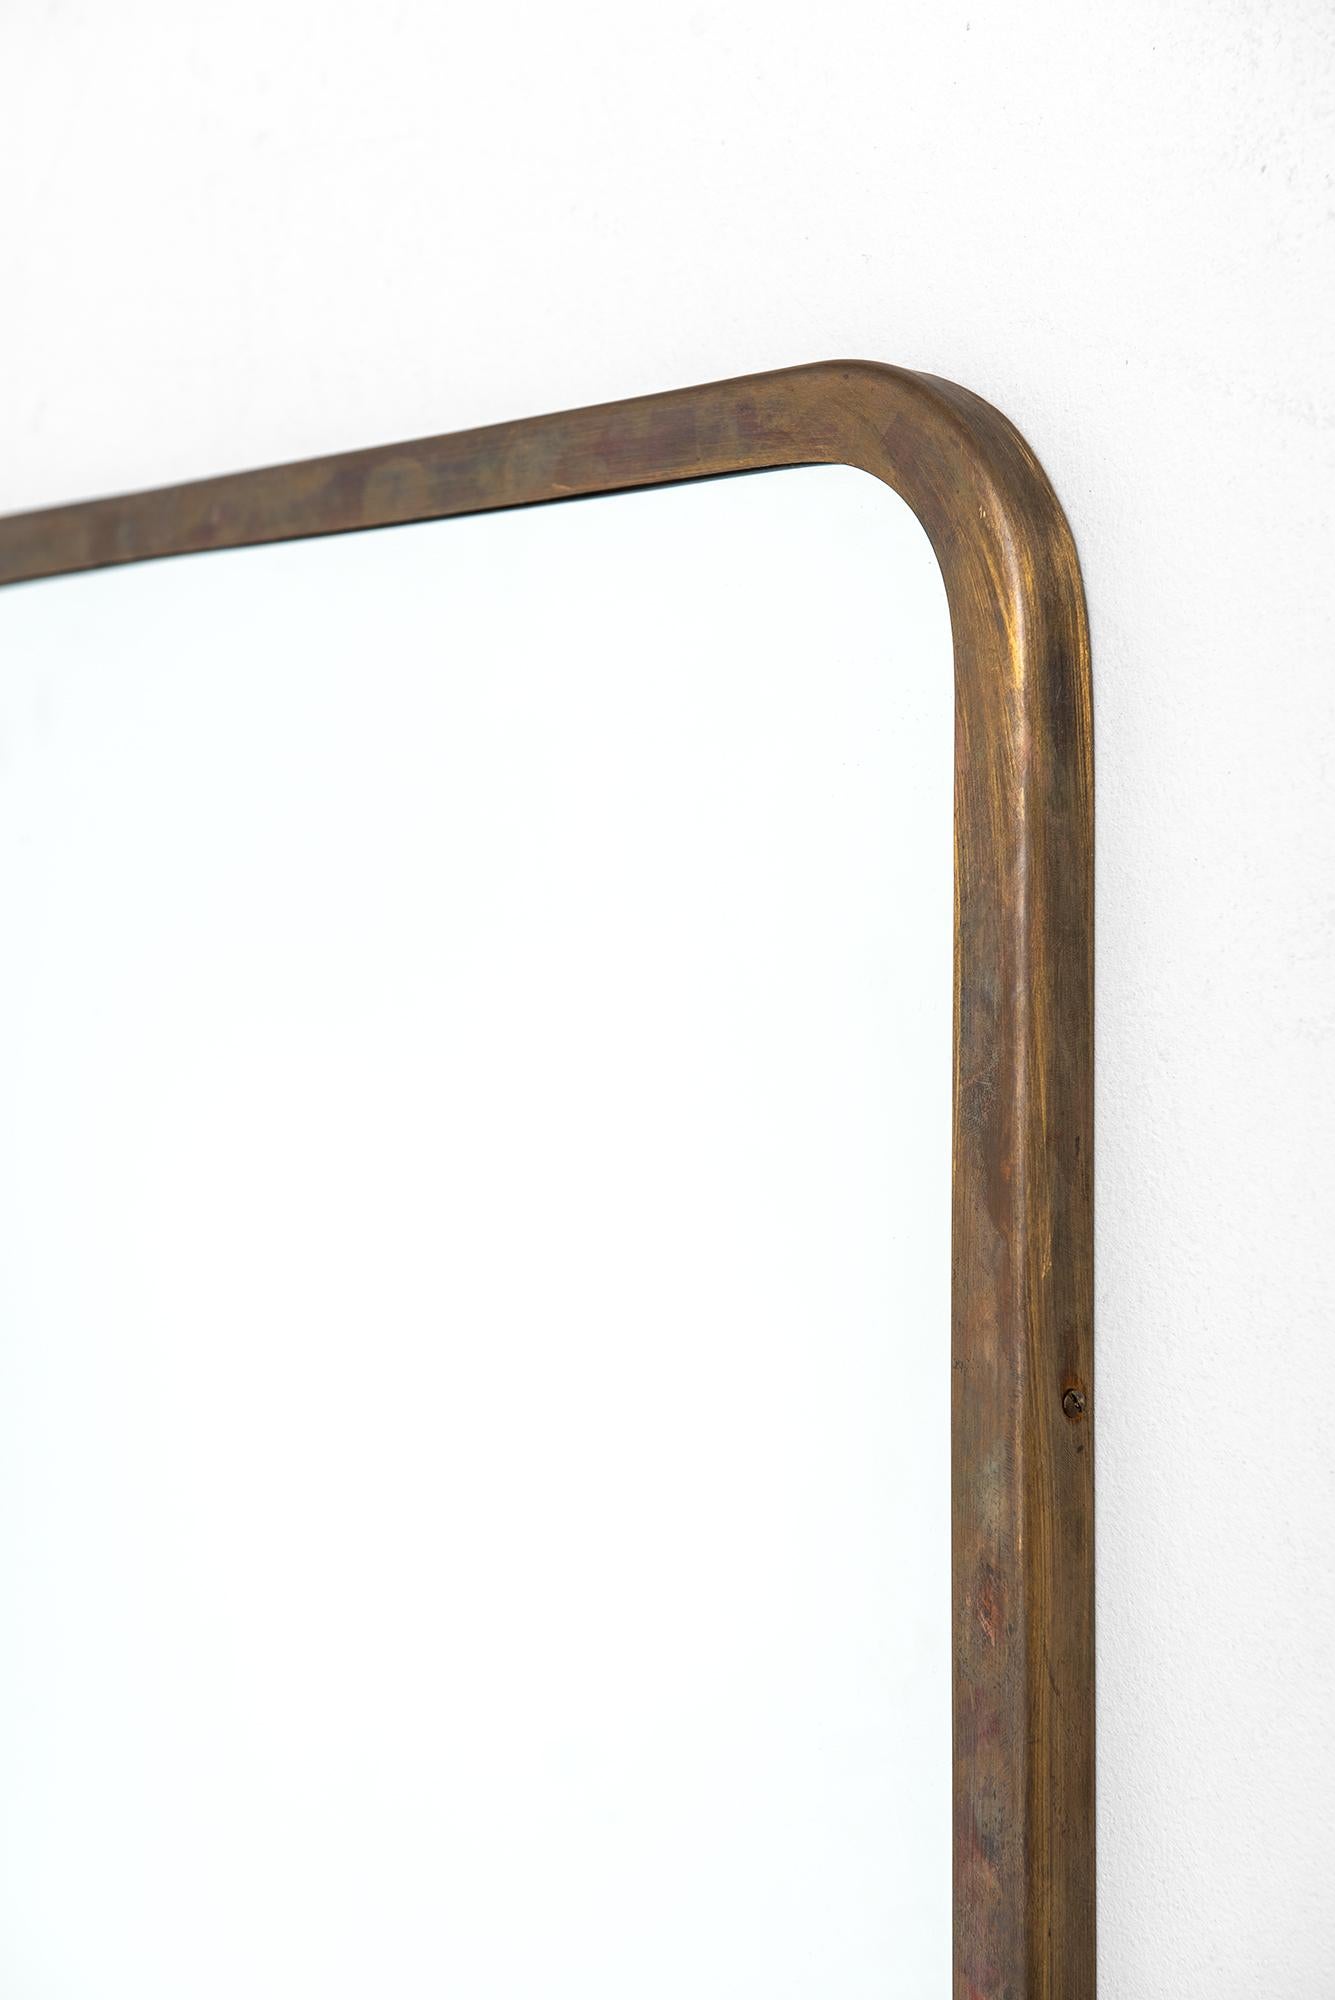 Rare mirror designed by Josef Frank. Produced by Svenskt Tenn in Sweden.